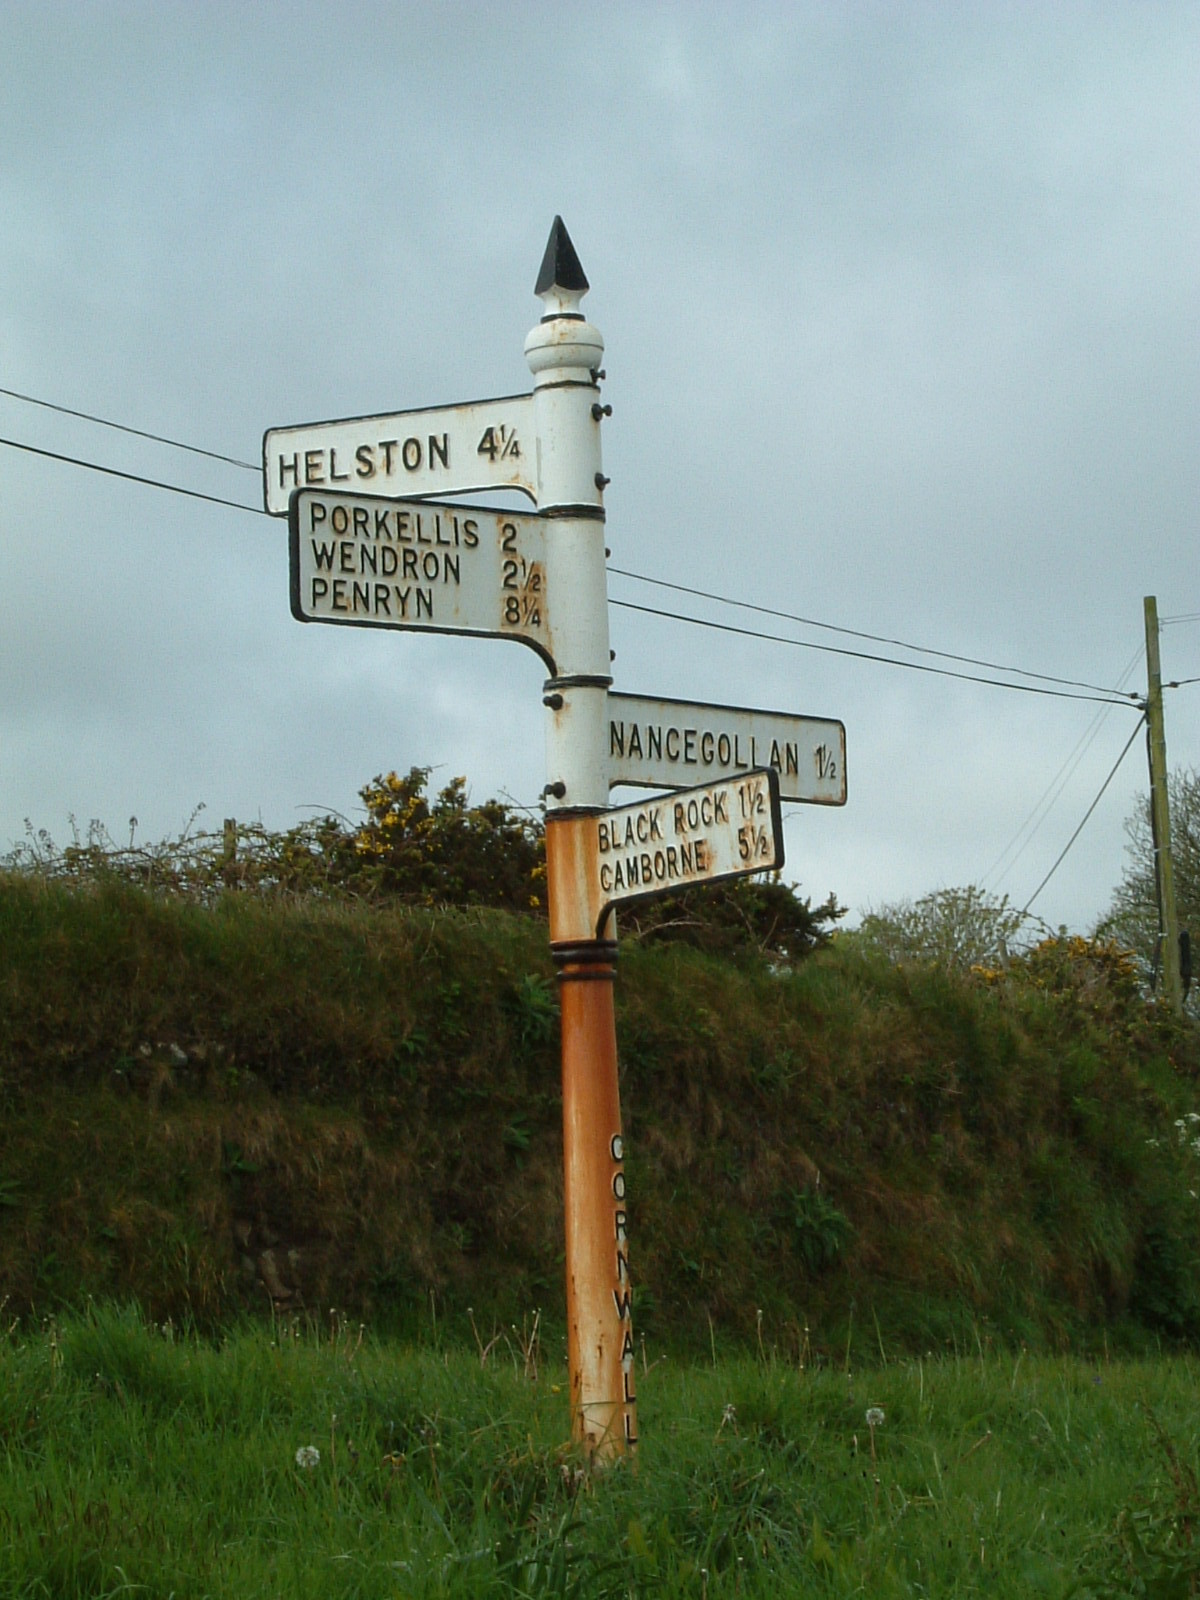 A signpost by Trevethan Farm